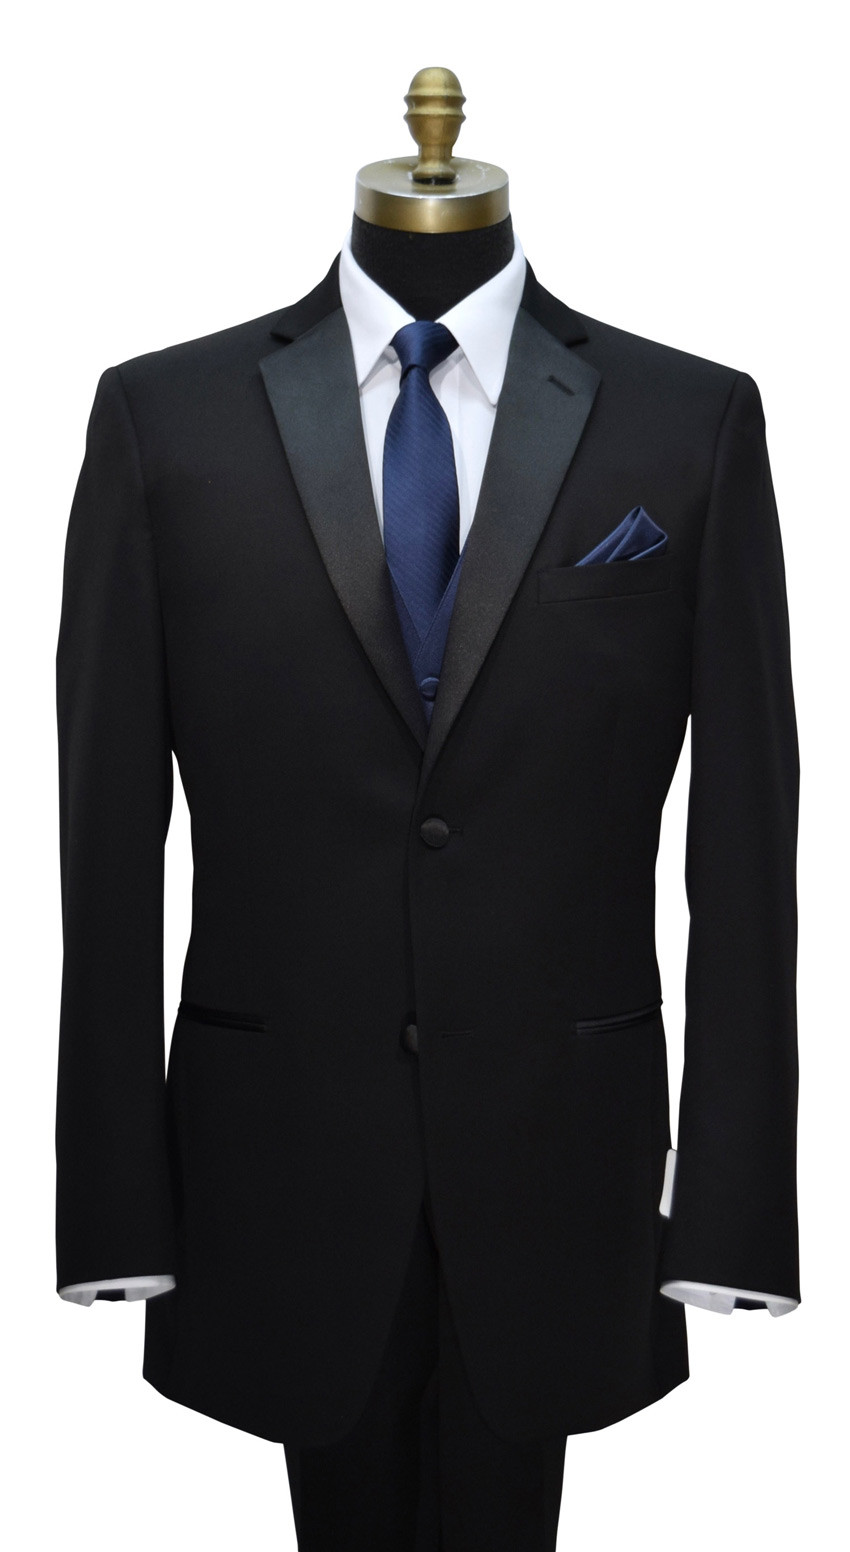 black notch lapel tuxedo with navy blue stripe tie at tuxbling.com